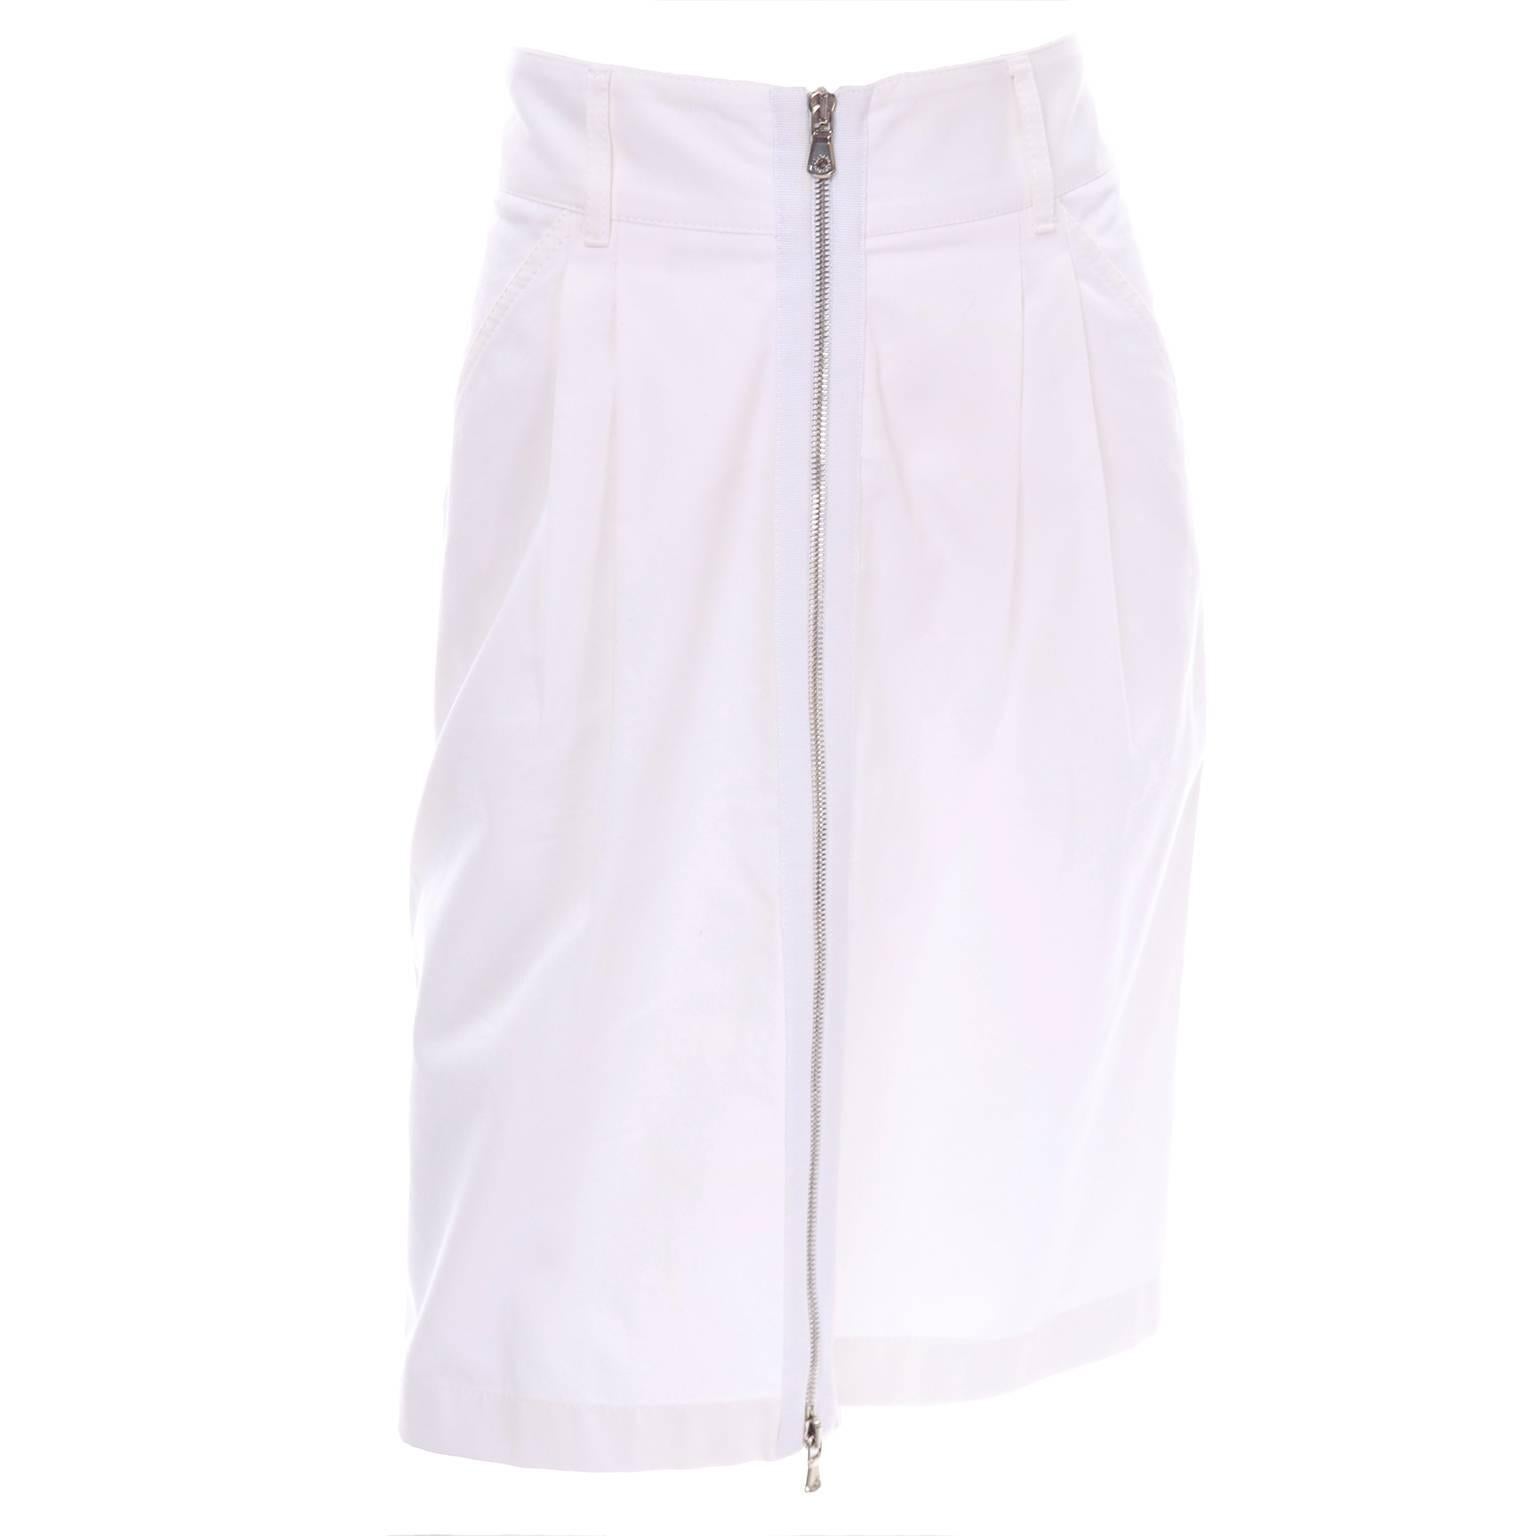 Dolce & Gabbana White Cotton Denim Pencil Skirt W/ Exposed Zipper Size 6 For Sale